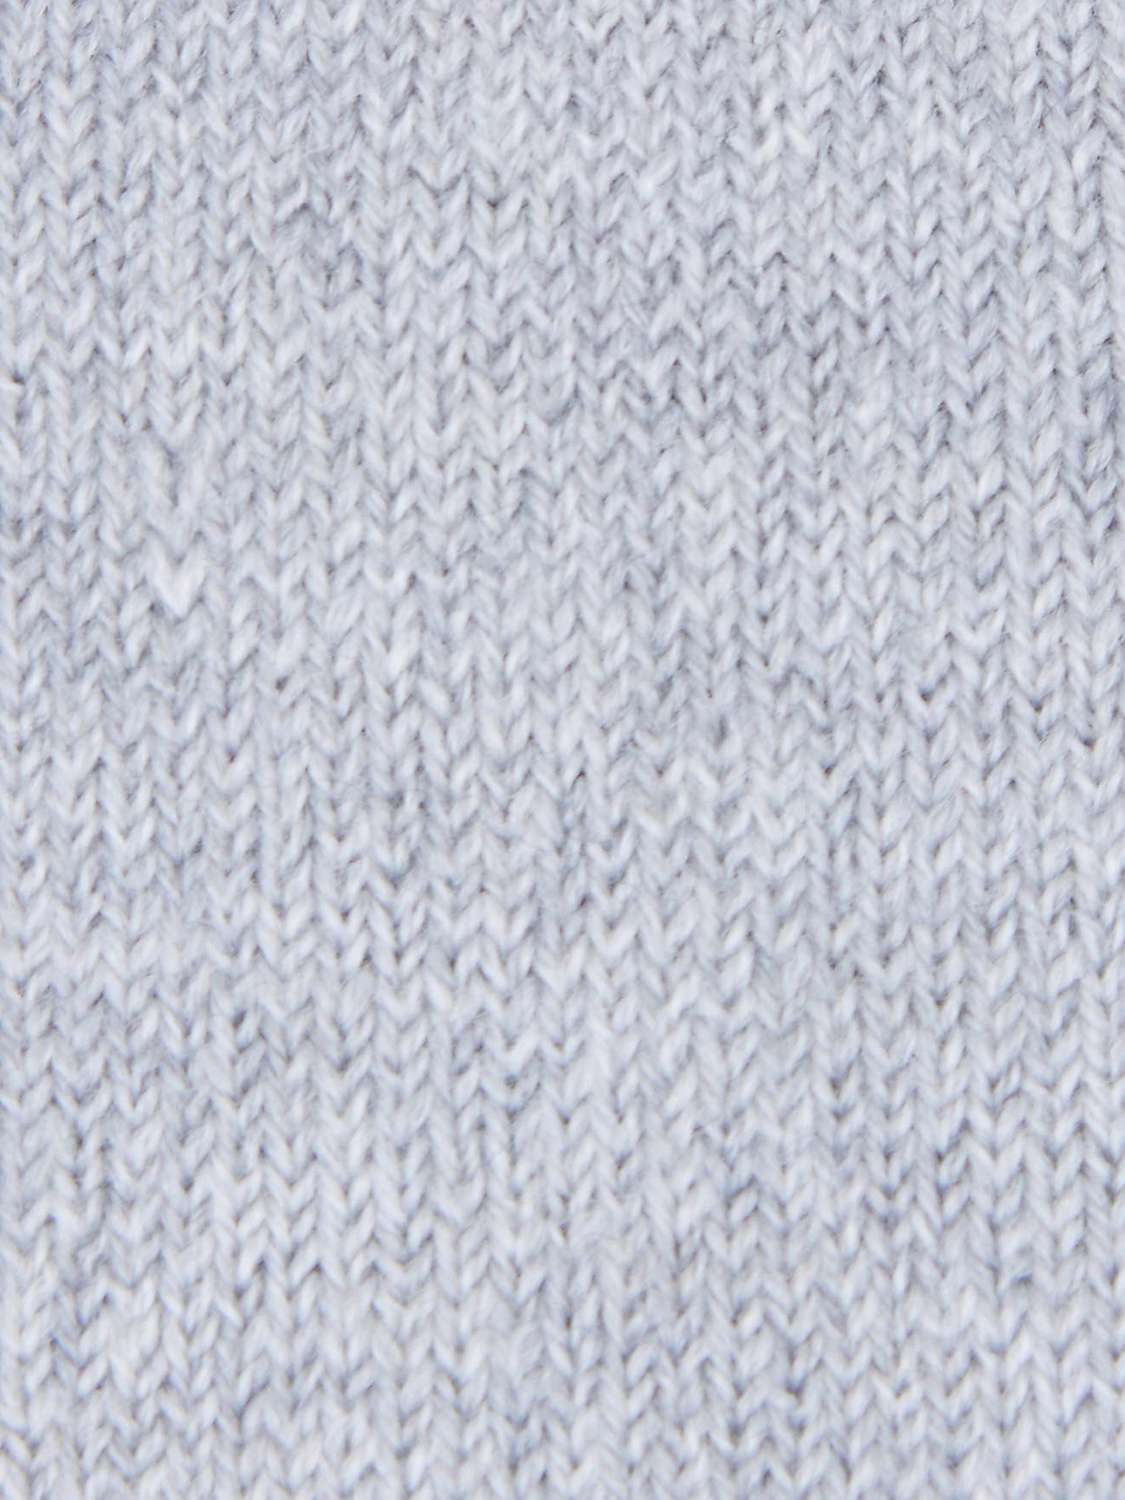 Buy Barbour Women's Wool Mix Wellie Knee Socks Online at johnlewis.com